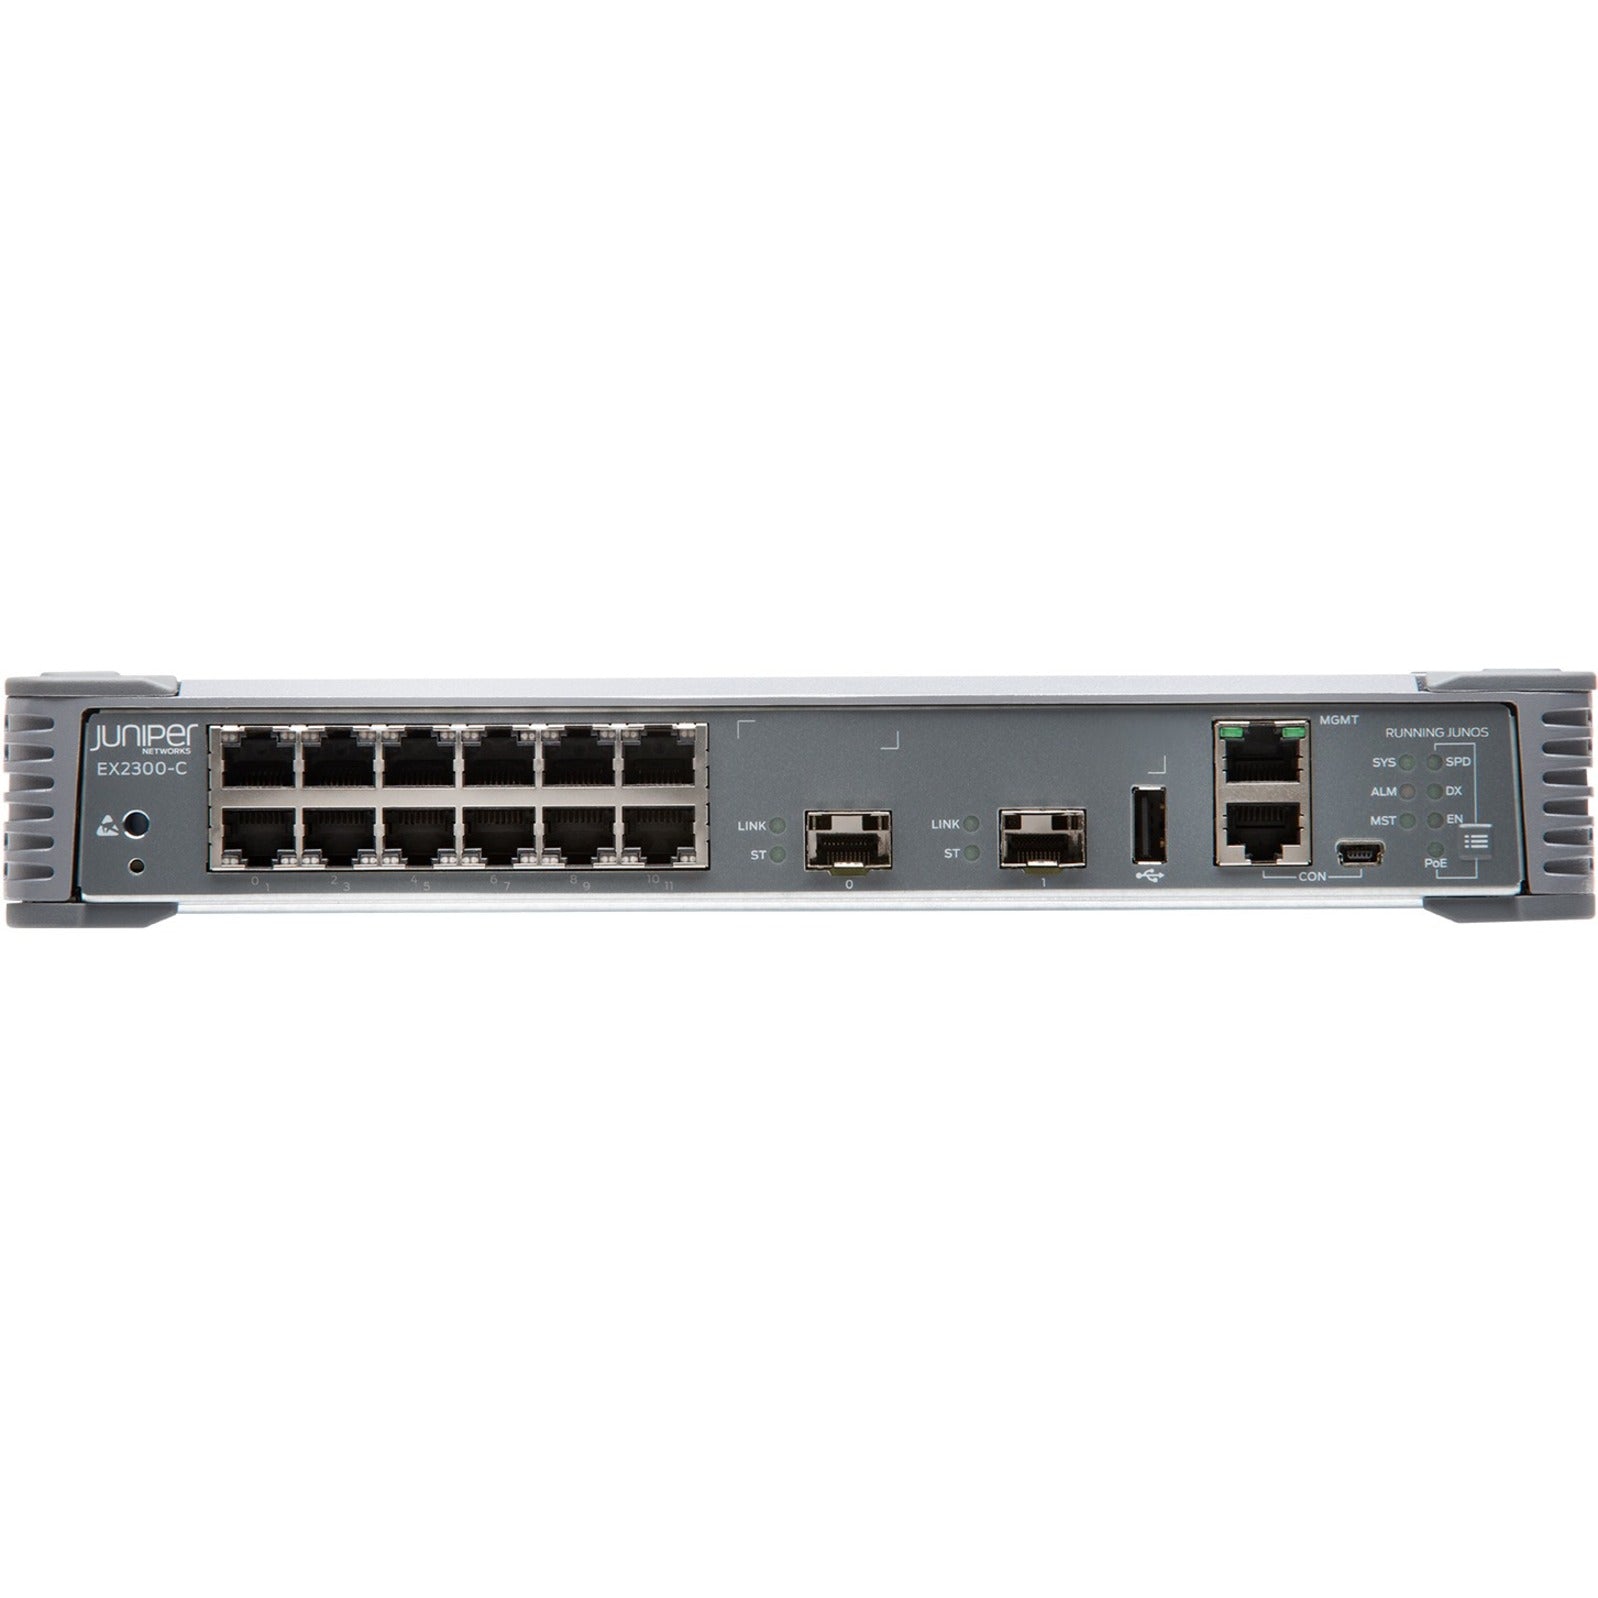 Juniper EX2300-C-12T Compact Ethernet Switch, 12 Gigabit Ethernet Ports, 2 10 Gigabit Ethernet Expansion Slots, Layer 3 Switch